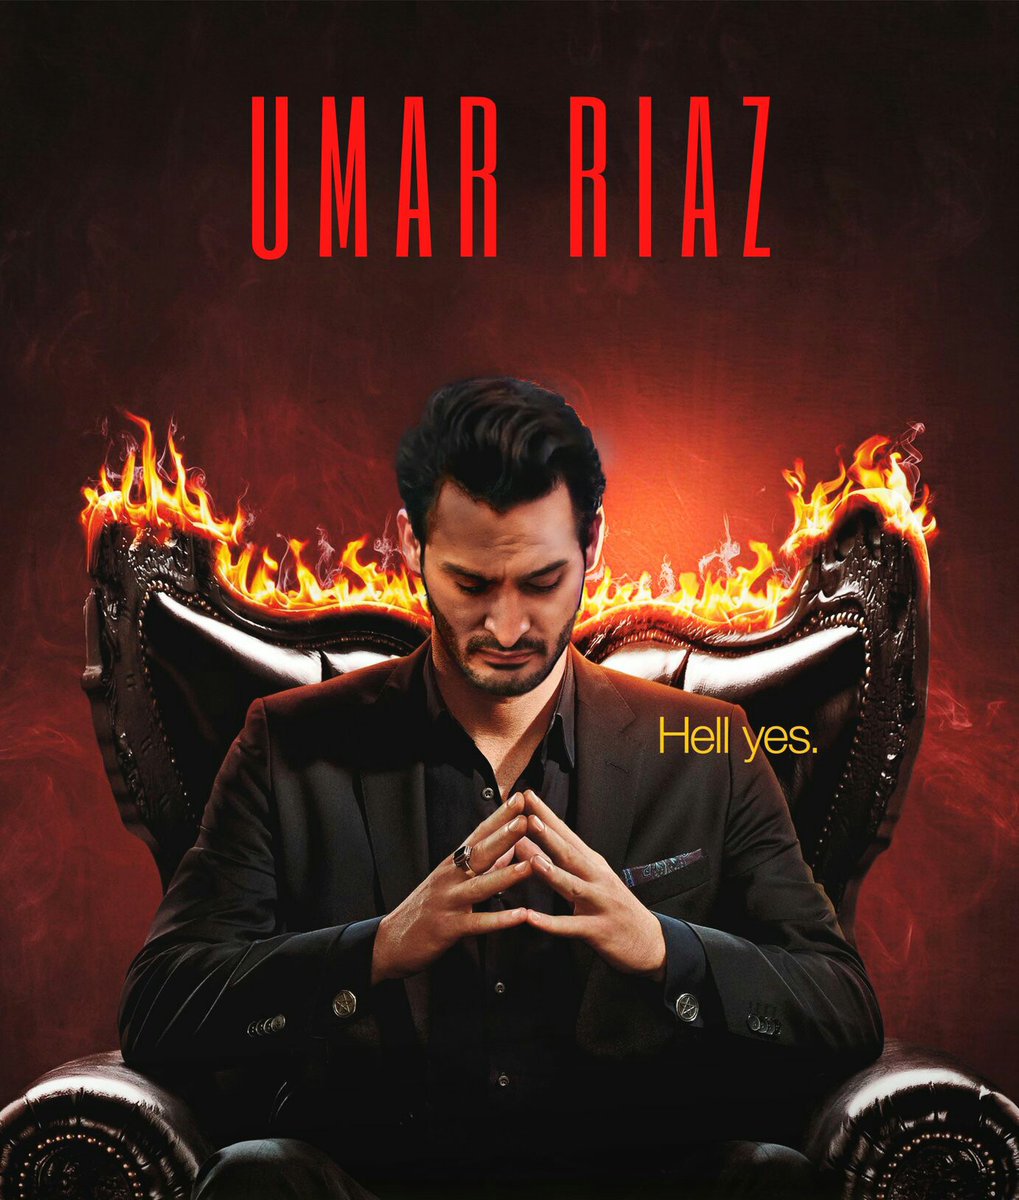 RT @realAlizaykhan1: Set your life on fire.
Seek those who fan your flames.

TASK SLAYER UMAR
#UmarRaiz https://t.co/hXlyEW1KIn